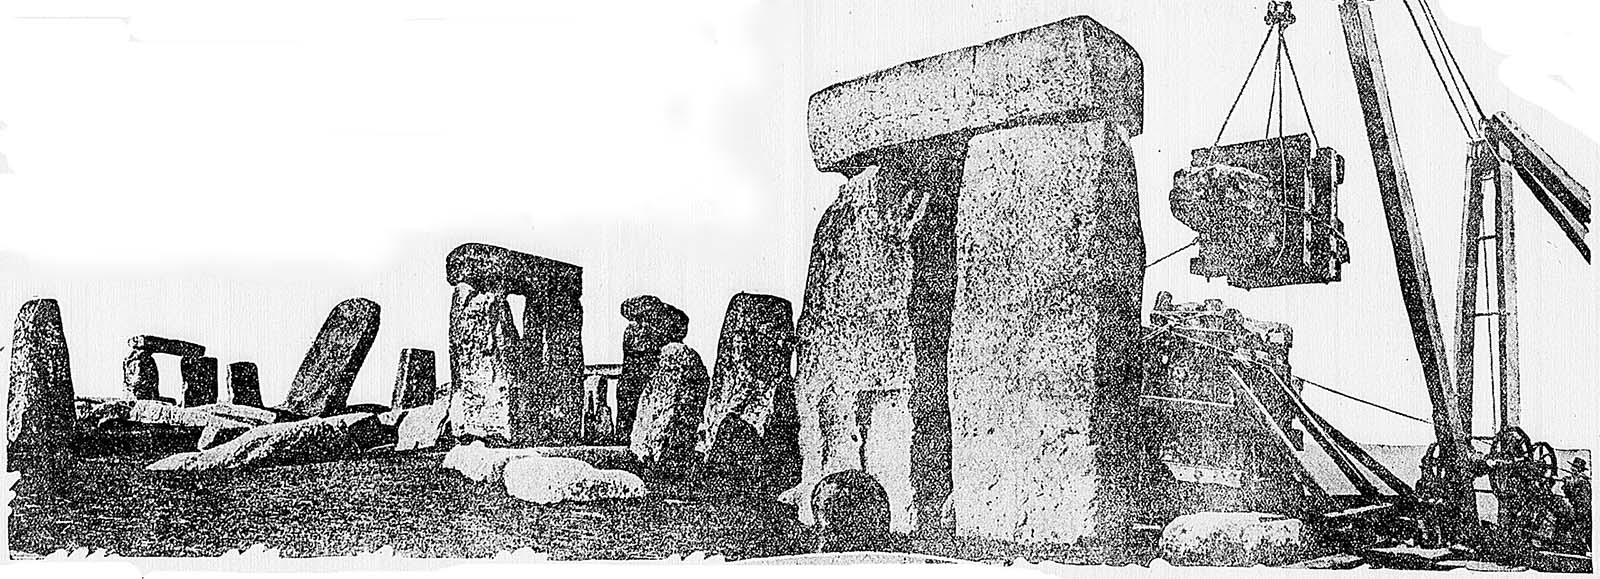 stonehenge-history-old-photographs (15).jpg